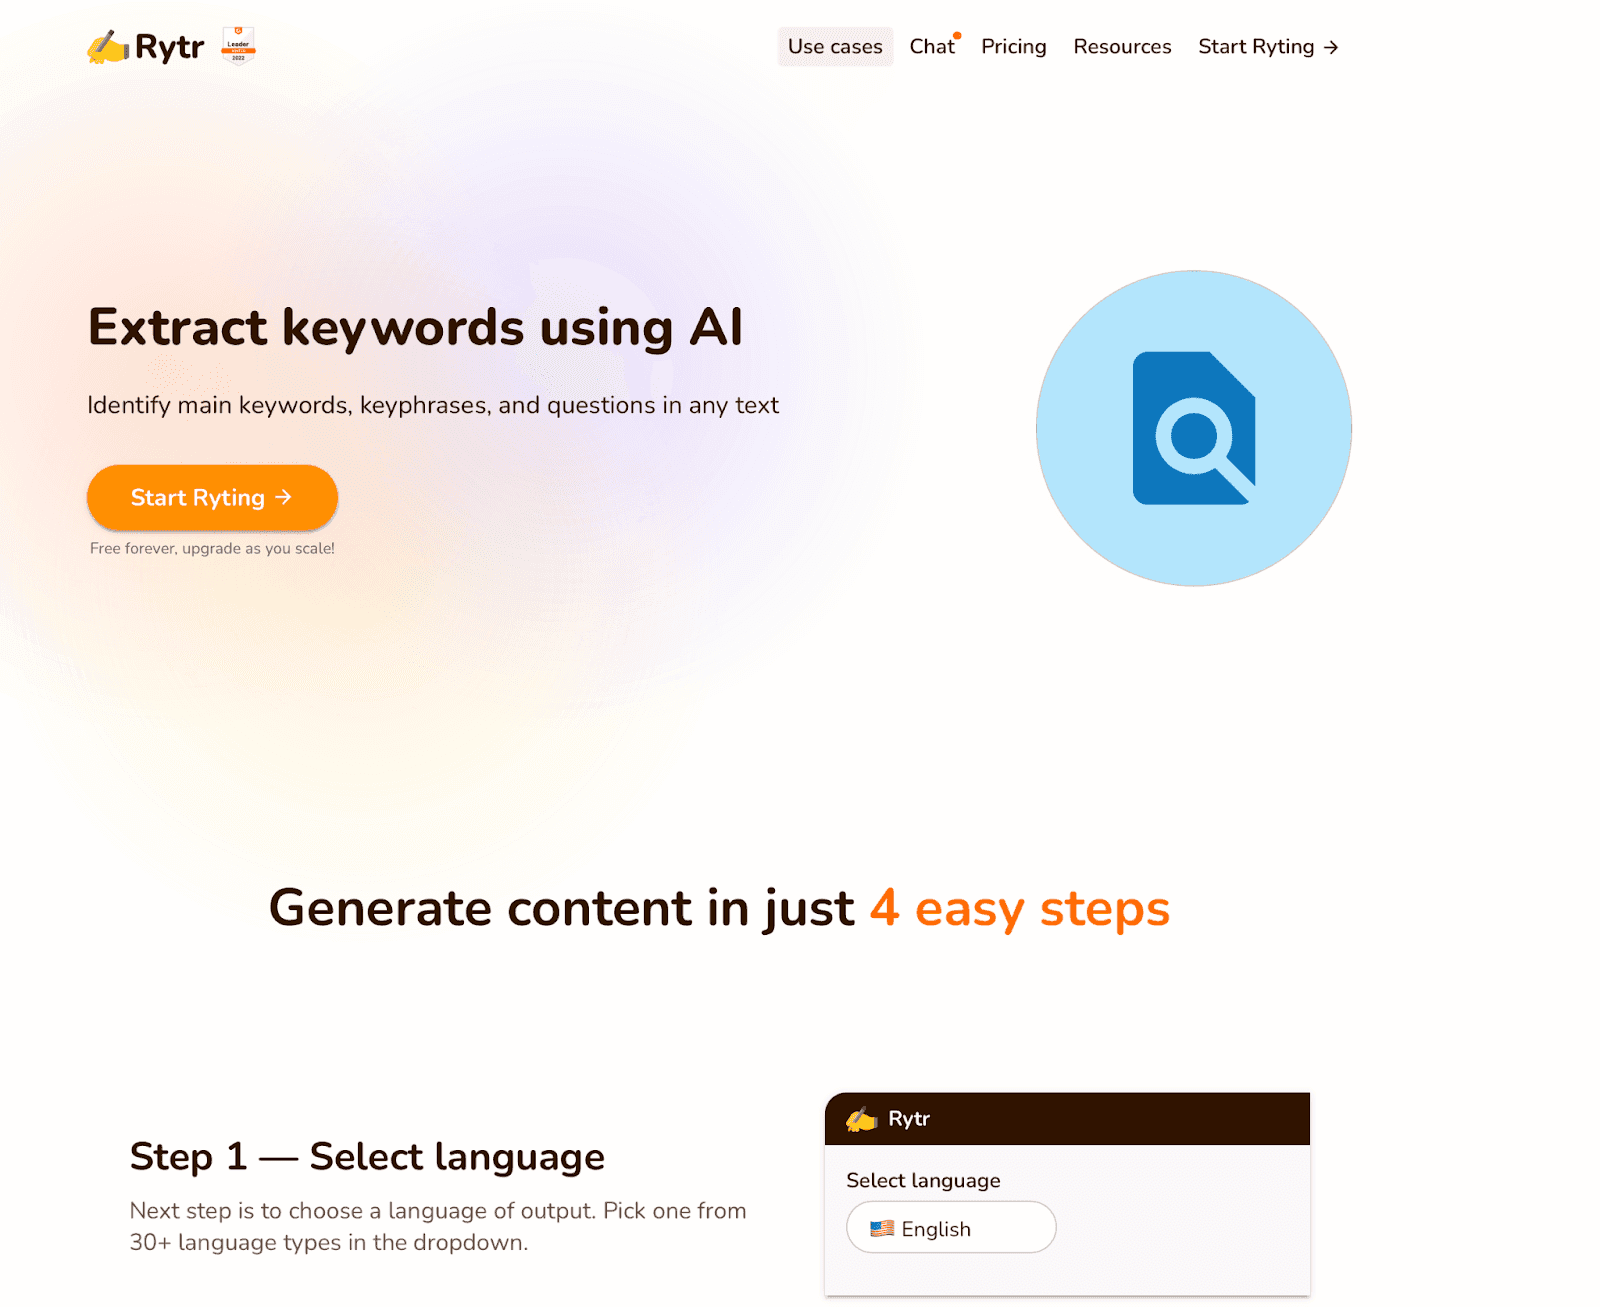 Rytr website - Extract keywords using AI